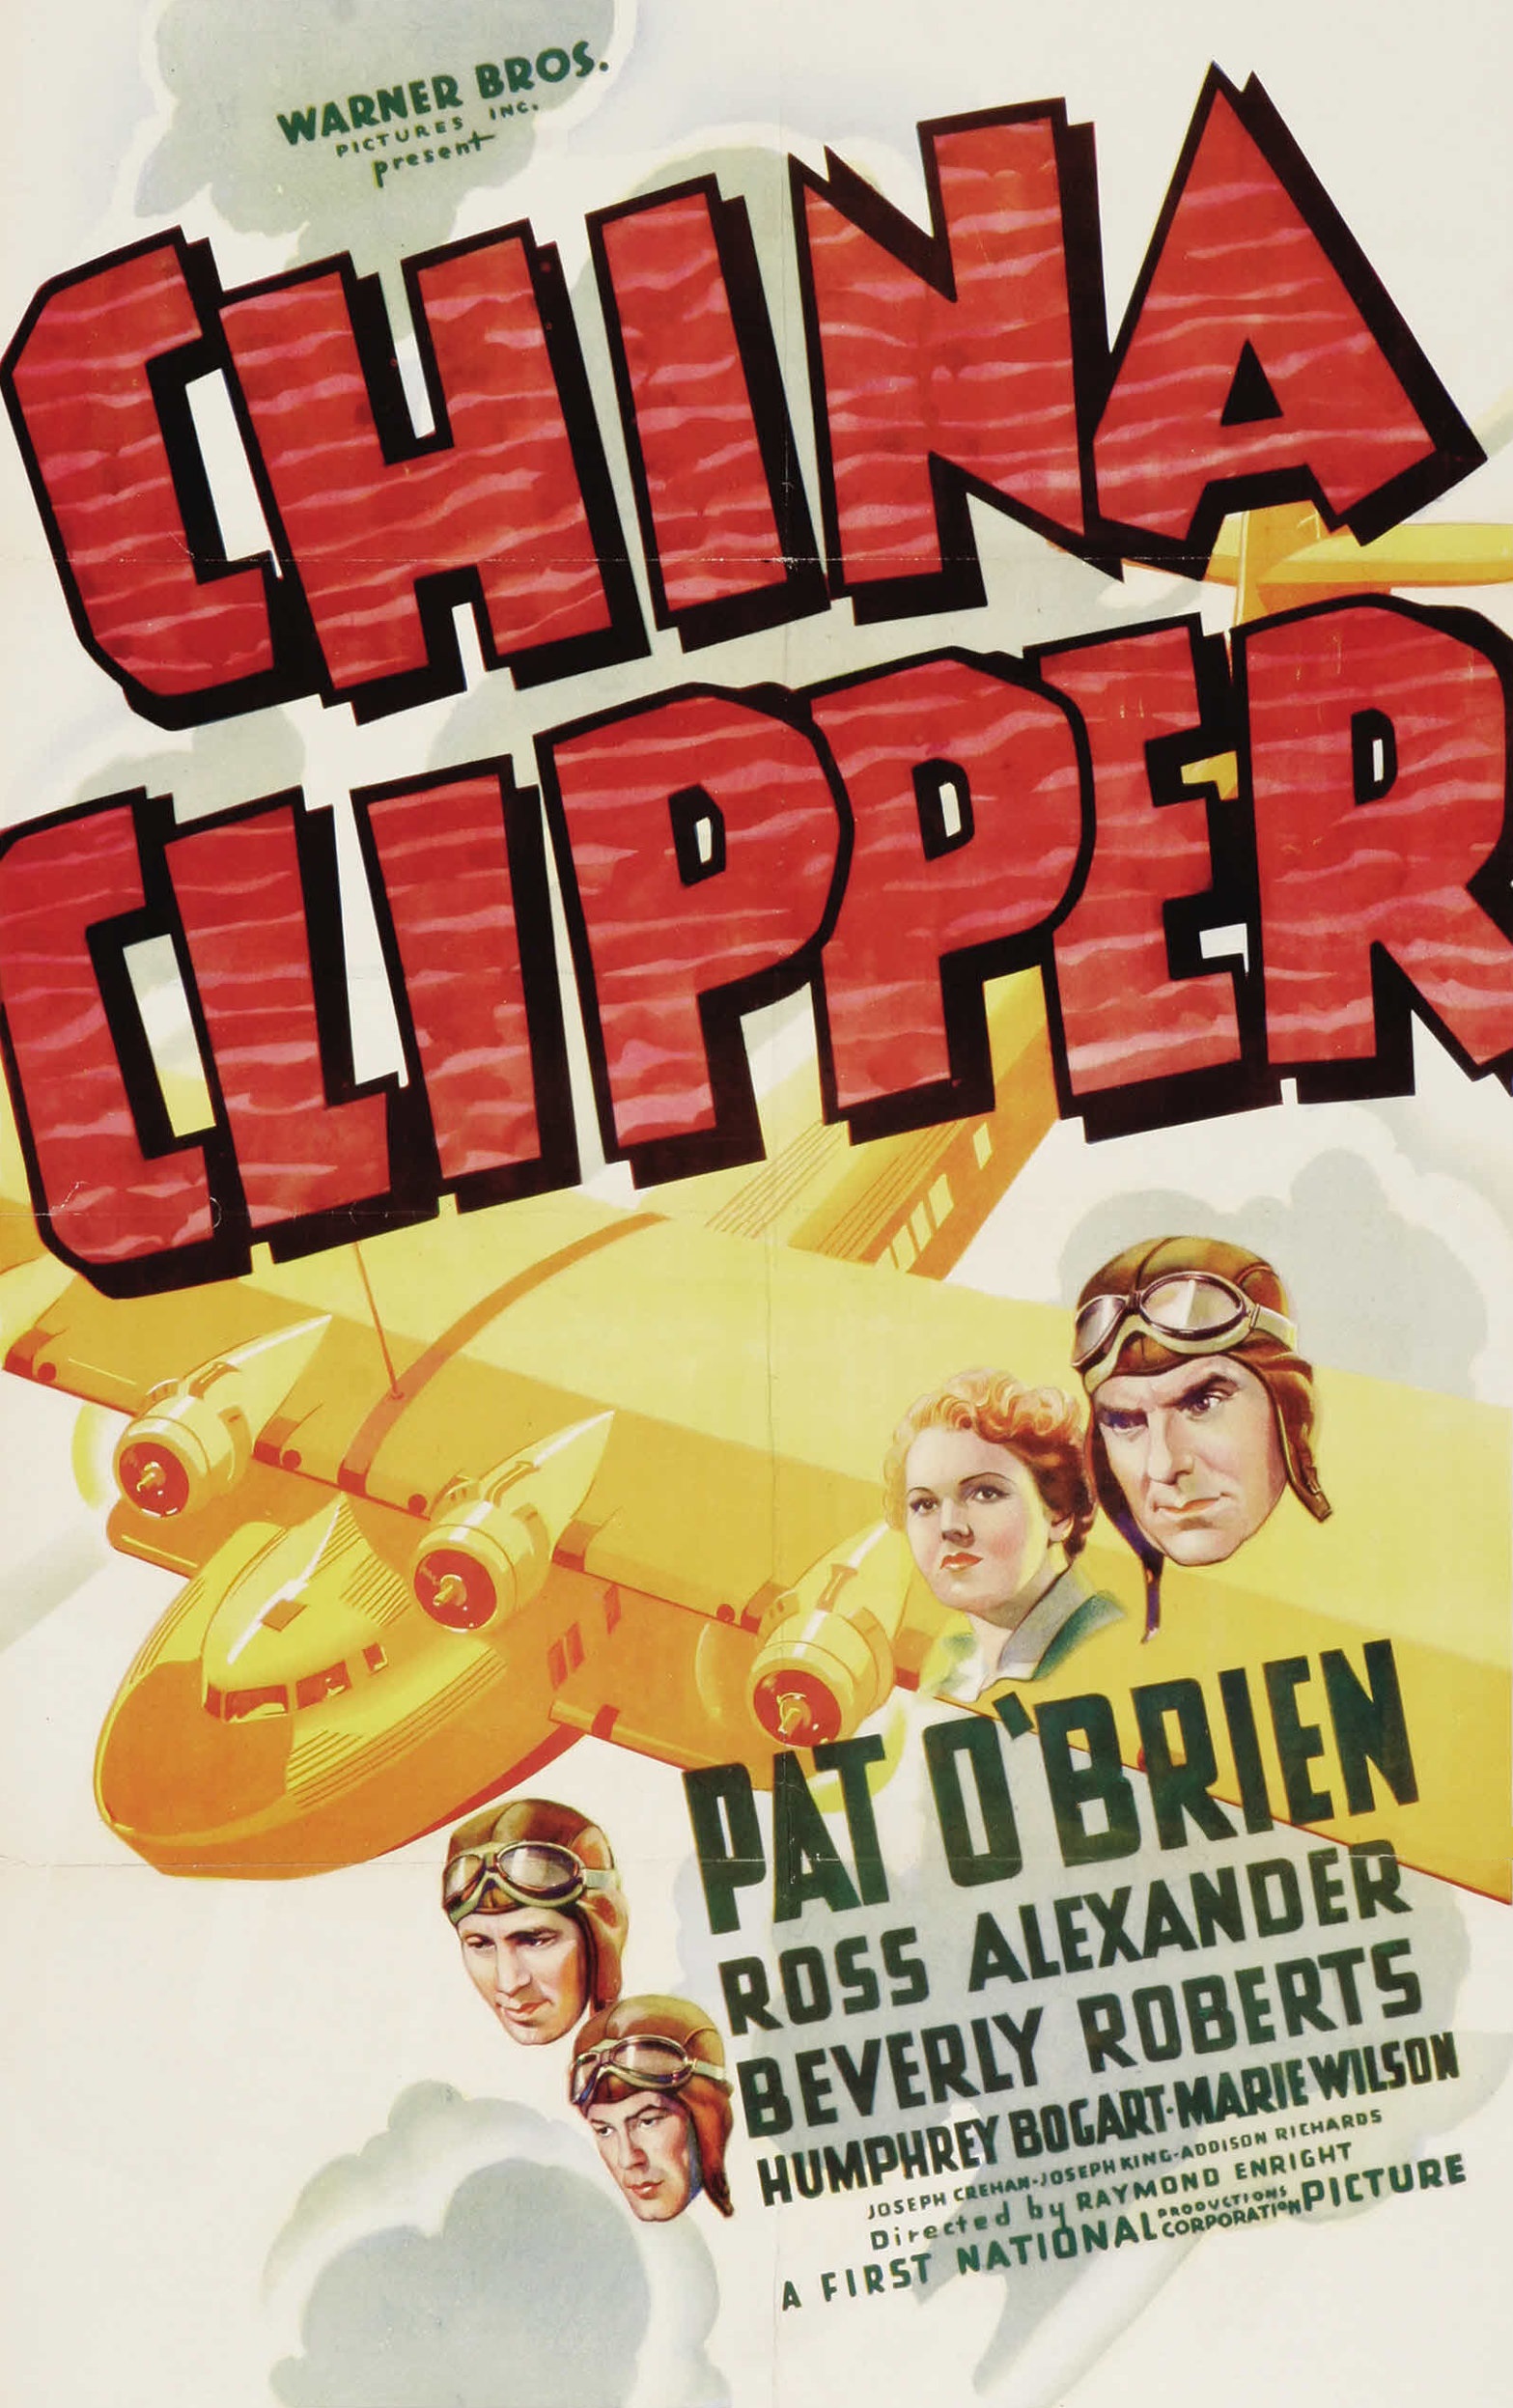 China Clipper (1936) starring Pat O'Brien on DVD on DVD